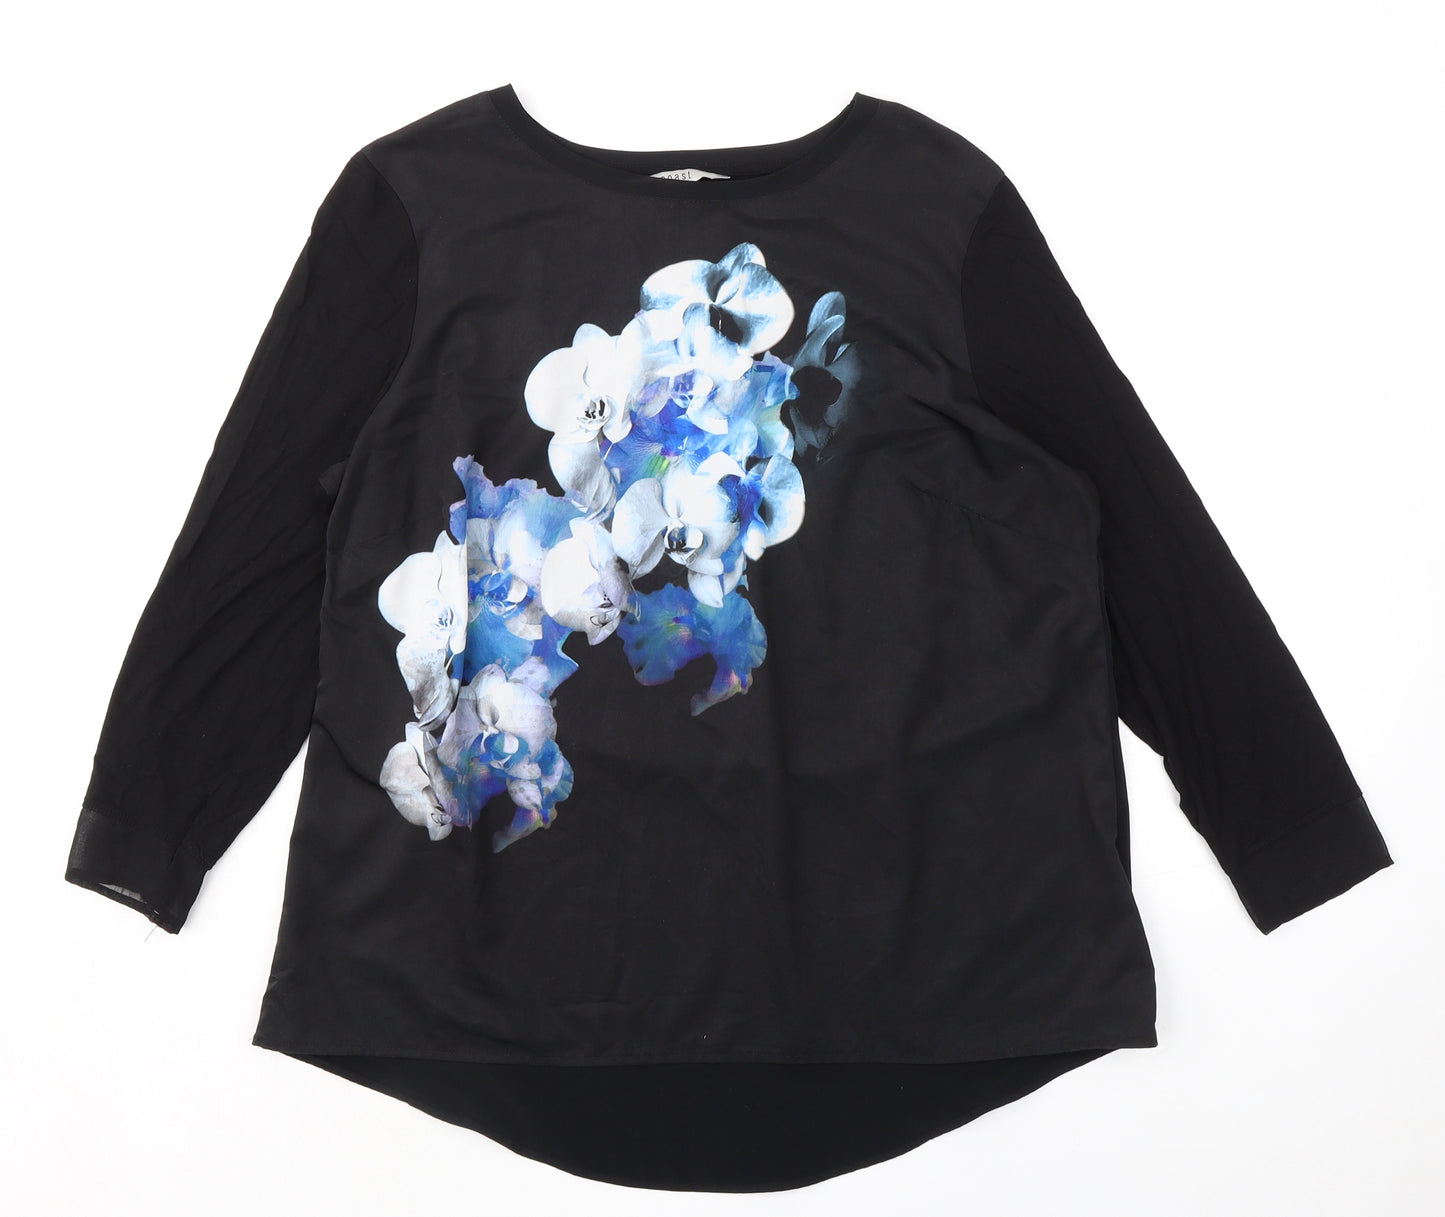 Coast Womens Black Viscose Basic T-Shirt Size 18 Round Neck - Floral Graphic